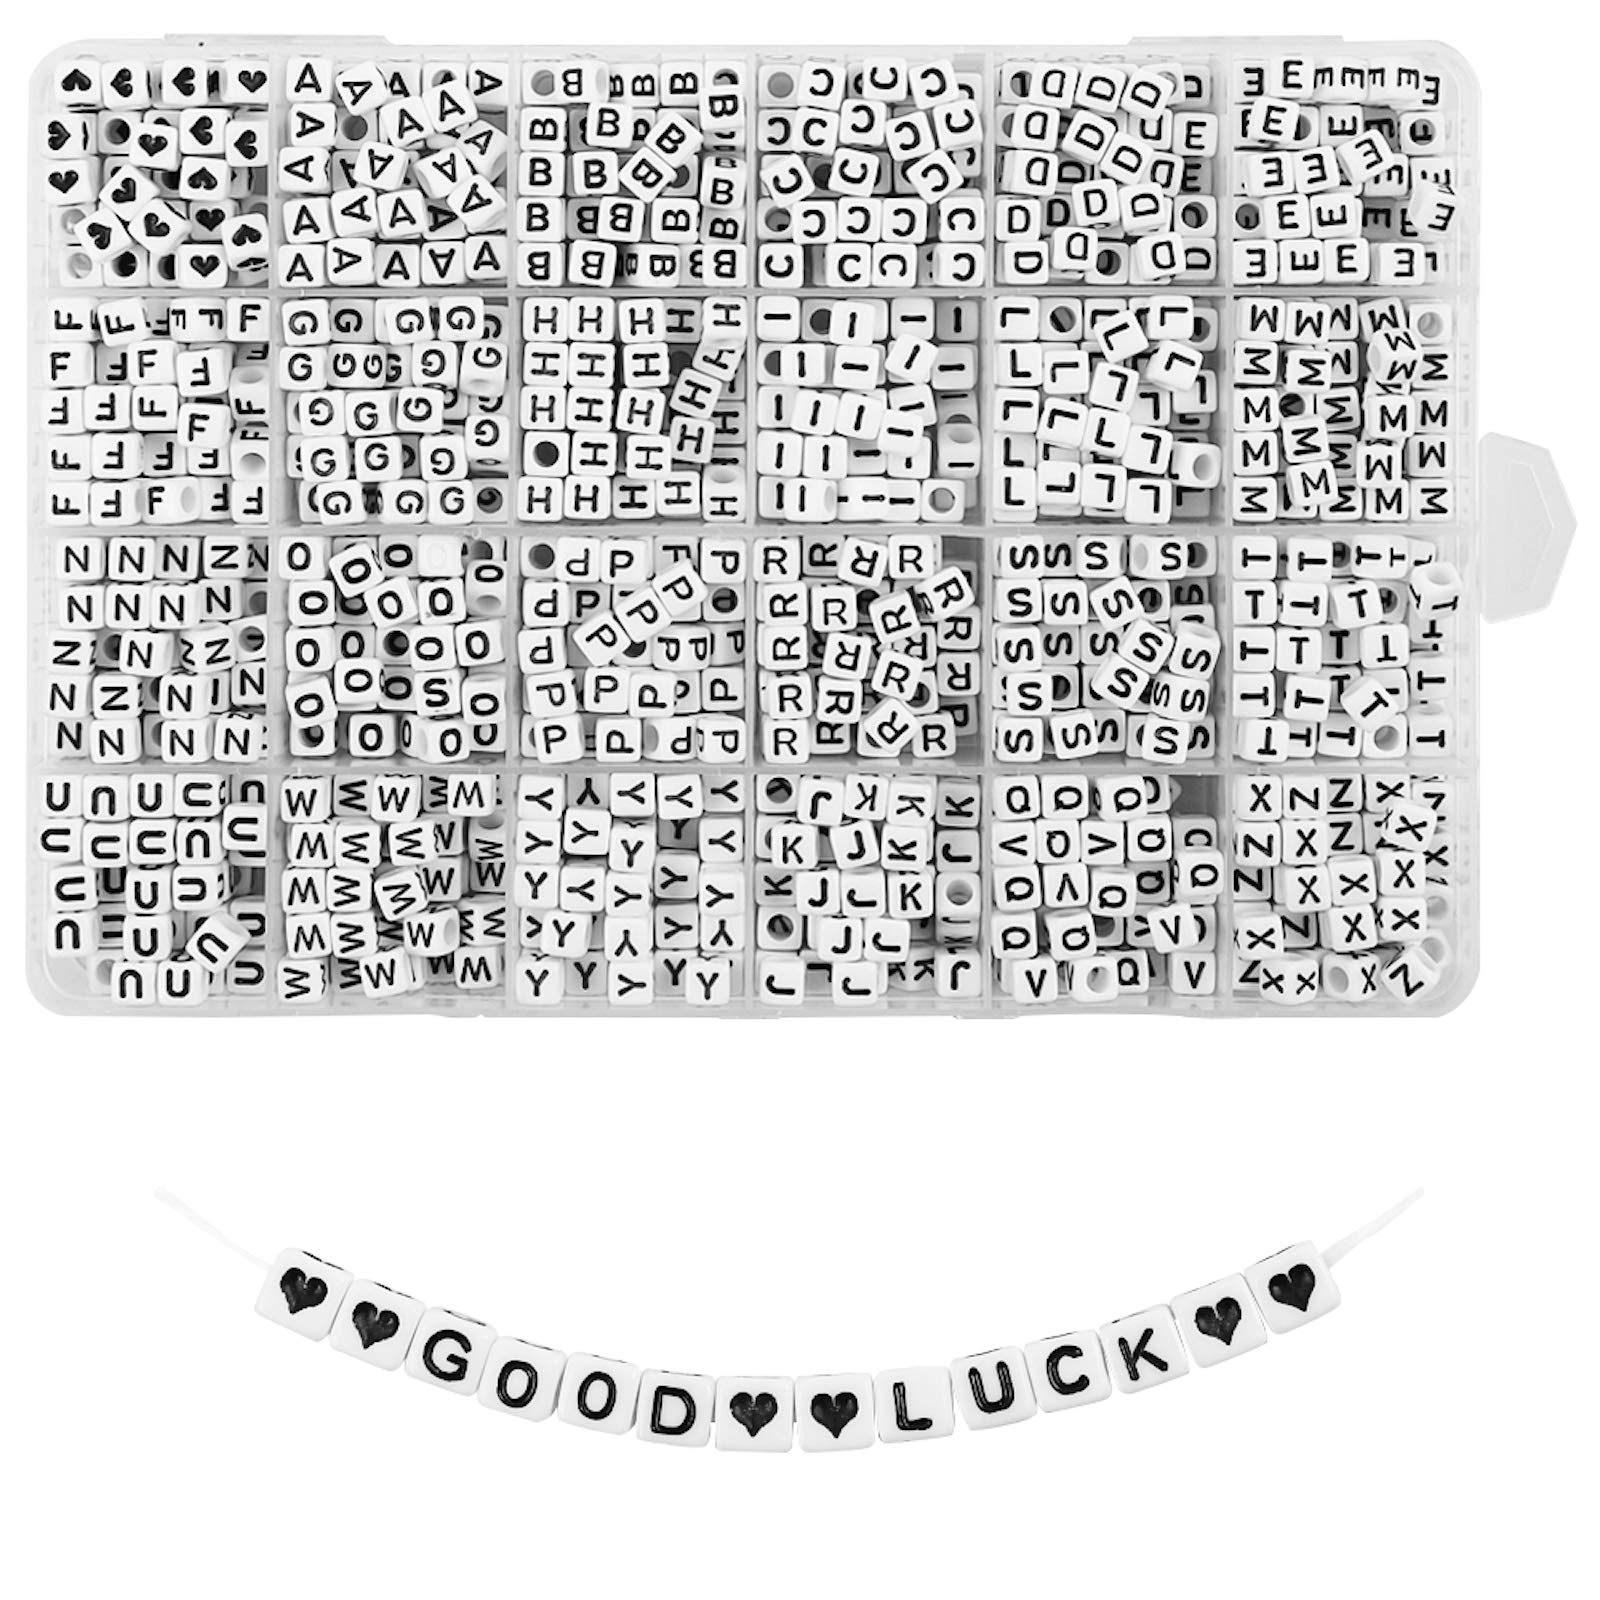 500 Bulk Beads Alphabet White Black Letters ABC Words 5x5mm Square Acrylic  Cubes